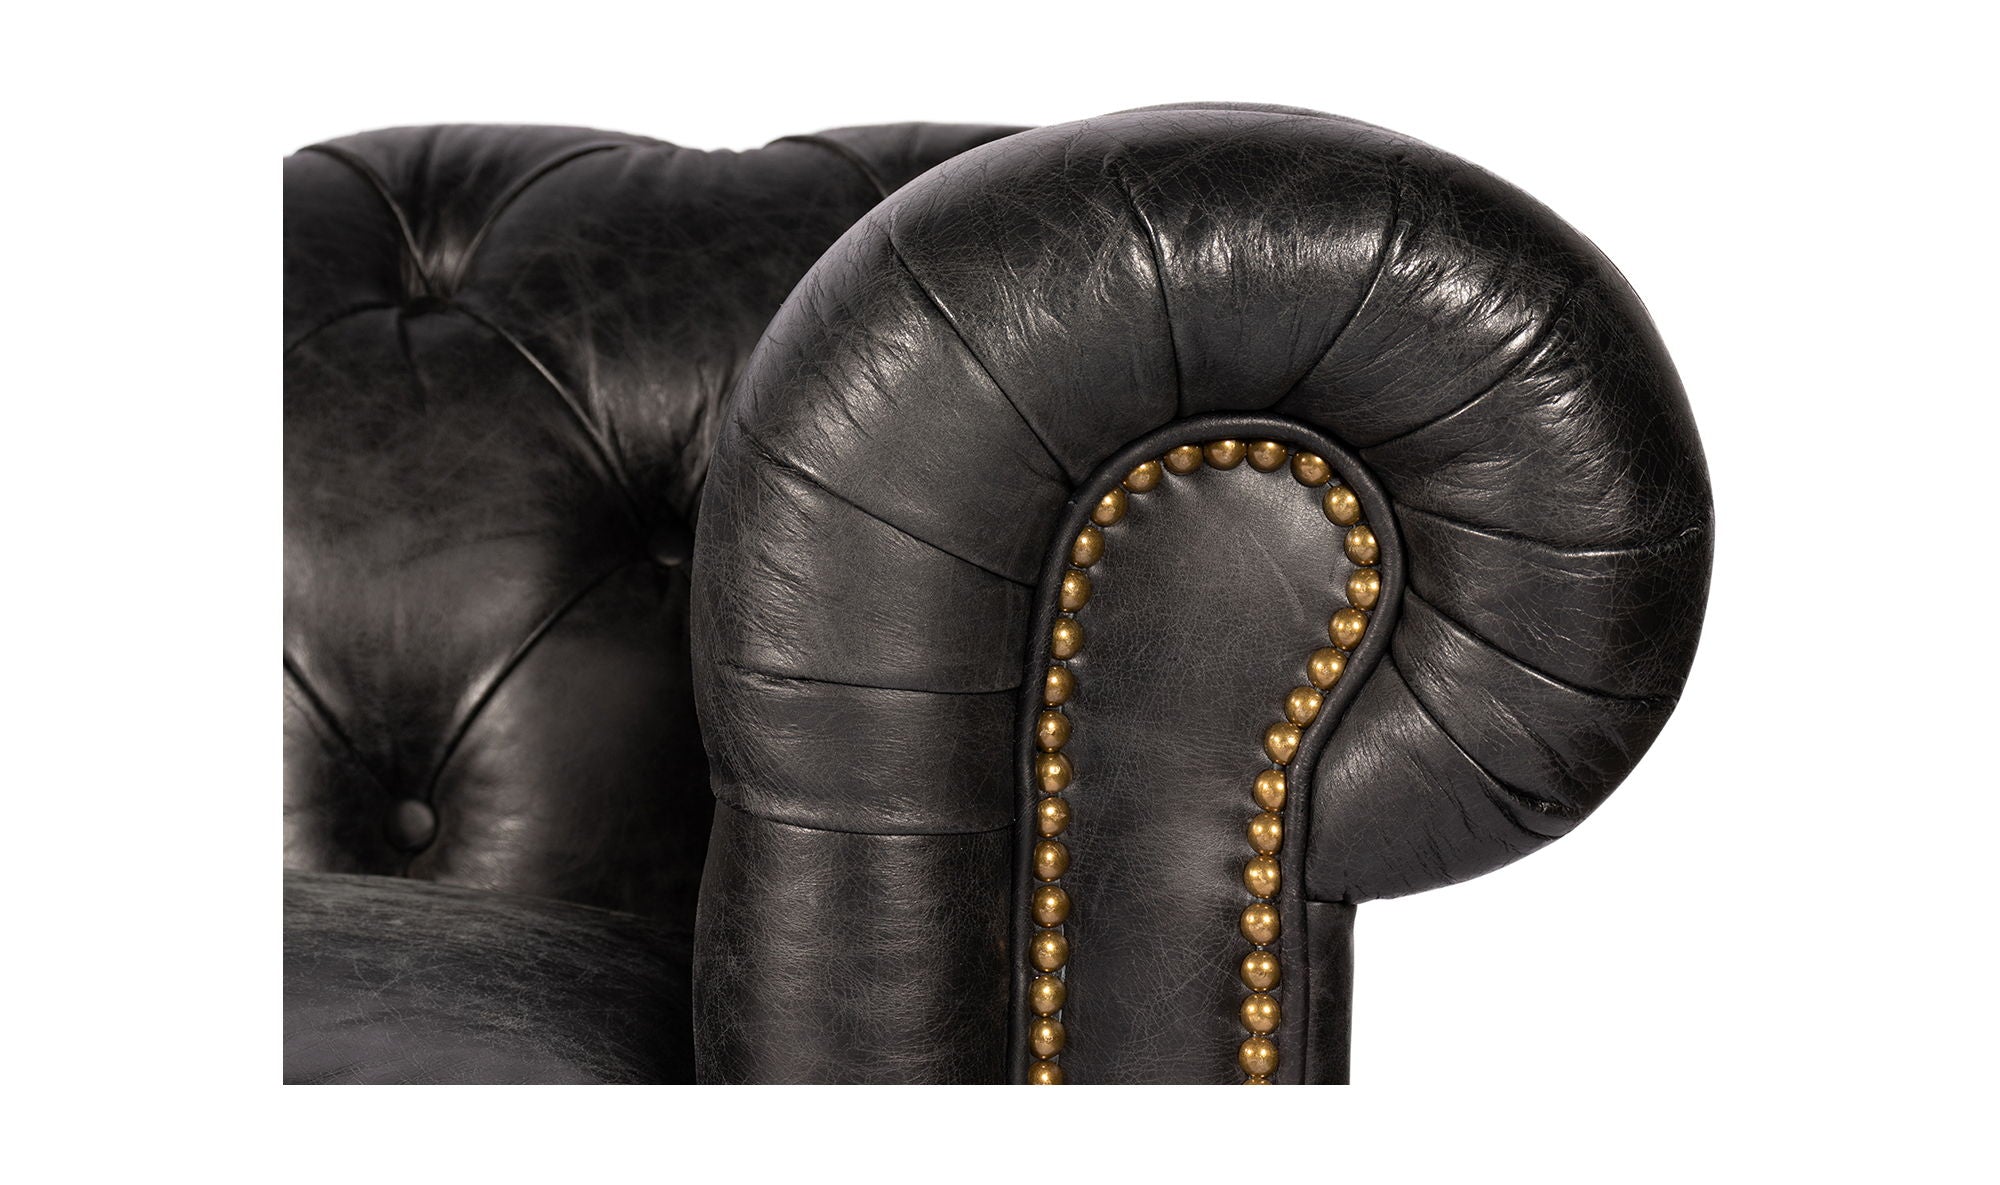 Birmingham Sofa - Black Top Grain Leather - Stylish Living Room Furniture